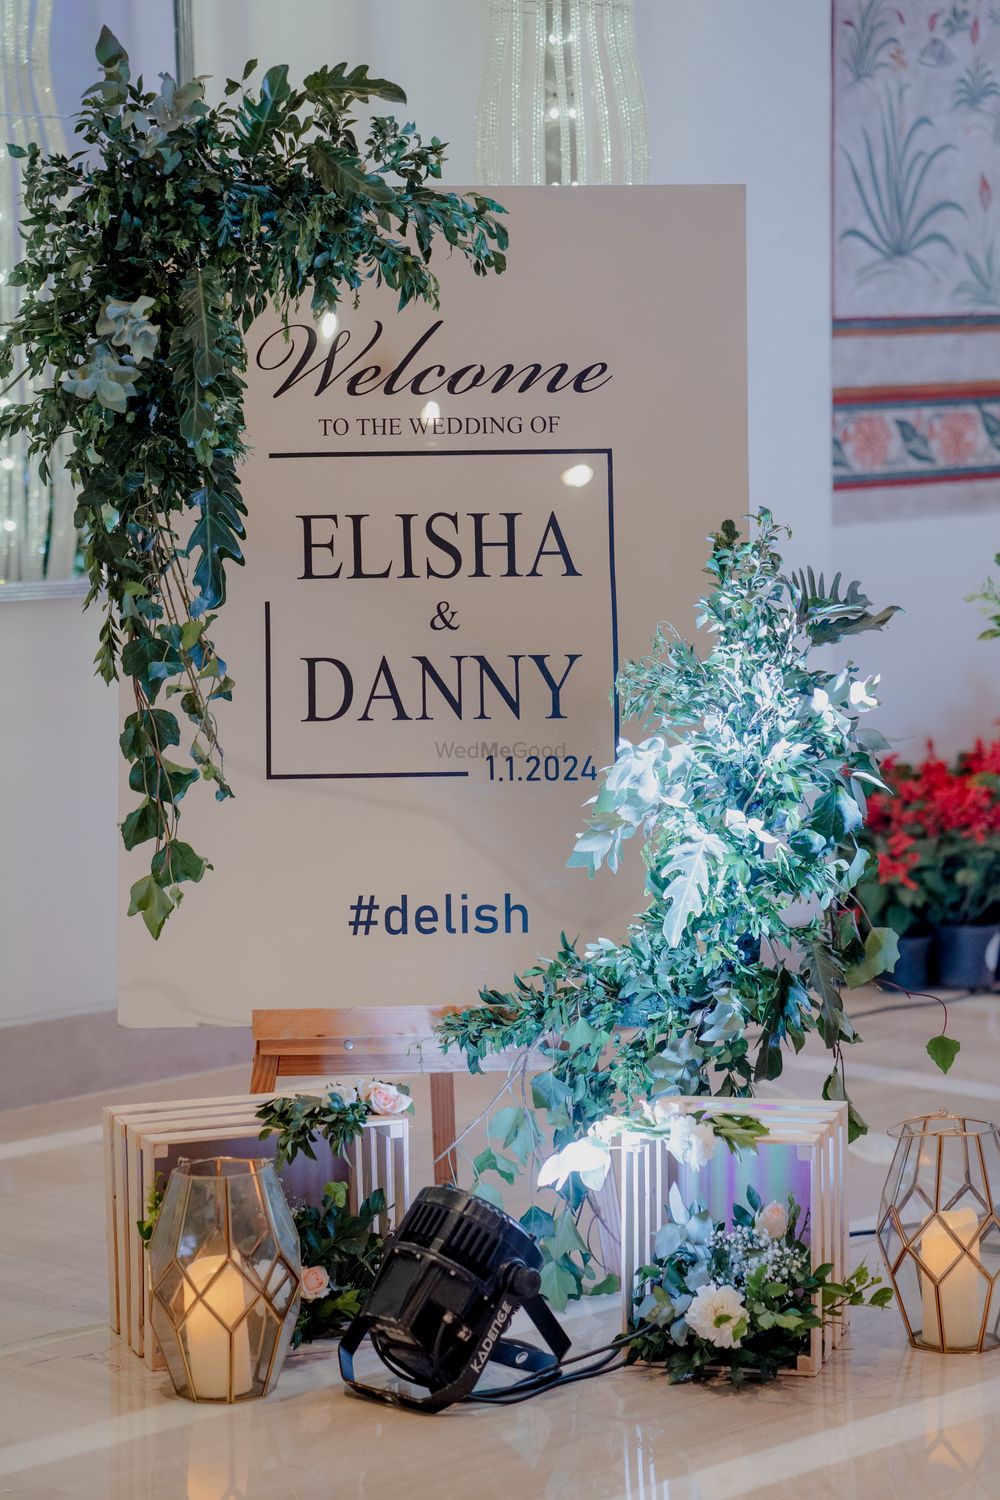 Photo From Elisha and Danny - By Katha Weddings